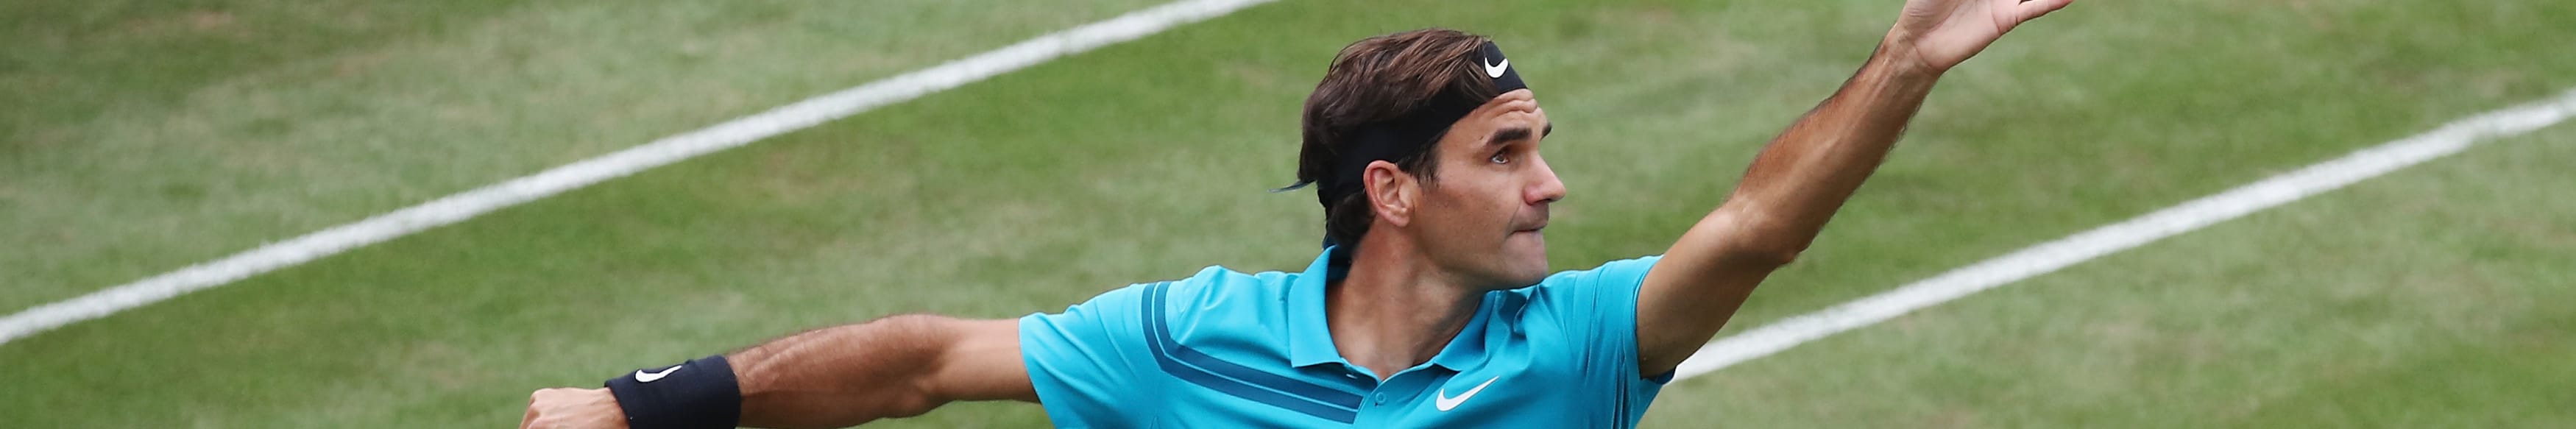 Roger Federer: Die Nummer 1 und den Sieg in Stuttgart im Blick